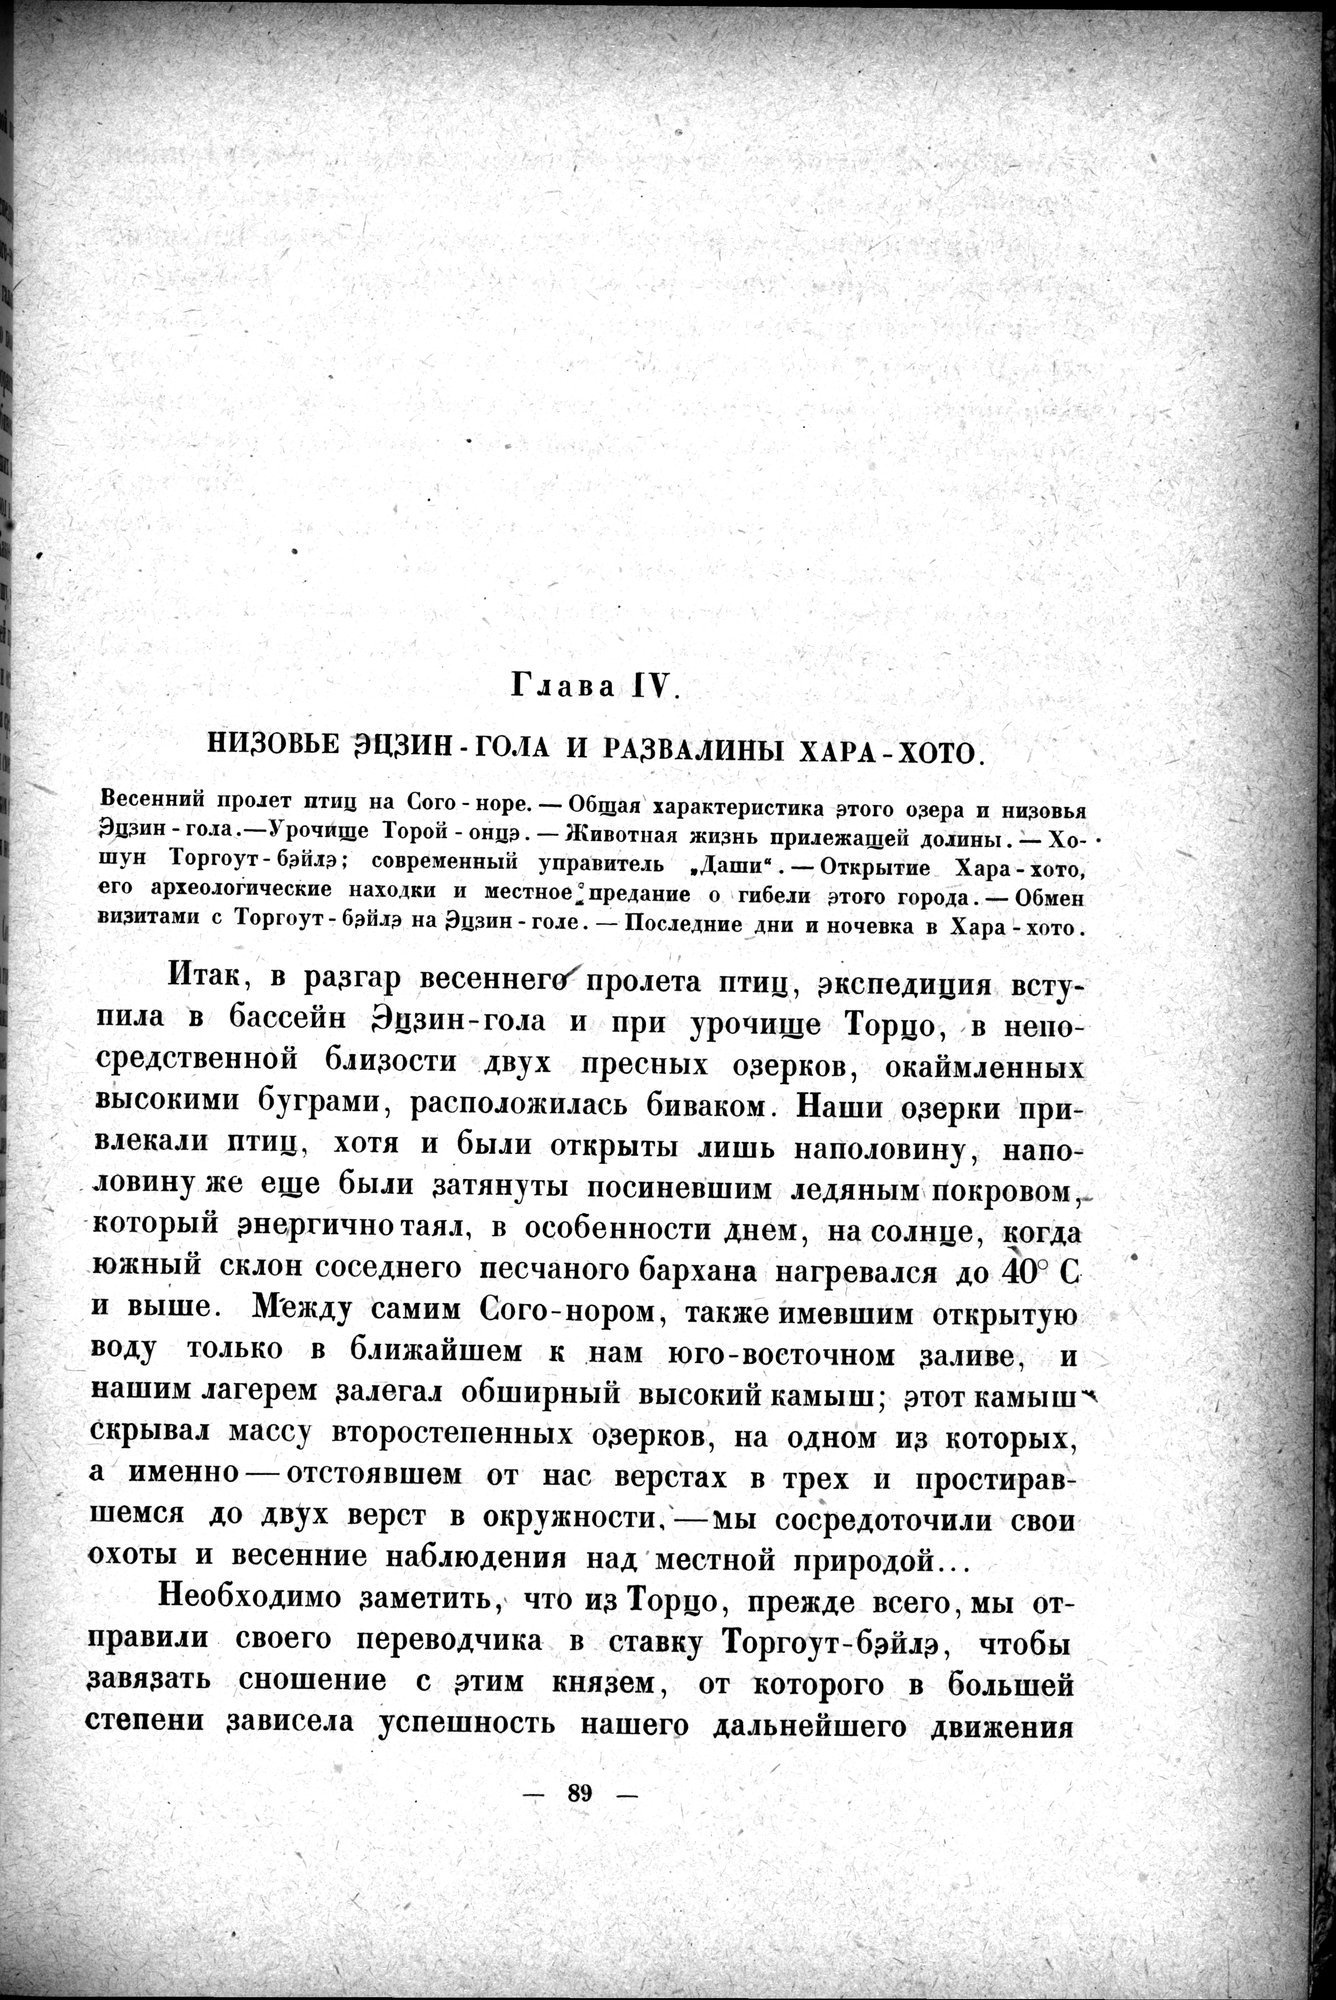 Mongoliya i Amdo i mertby gorod Khara-Khoto : vol.1 / Page 115 (Grayscale High Resolution Image)